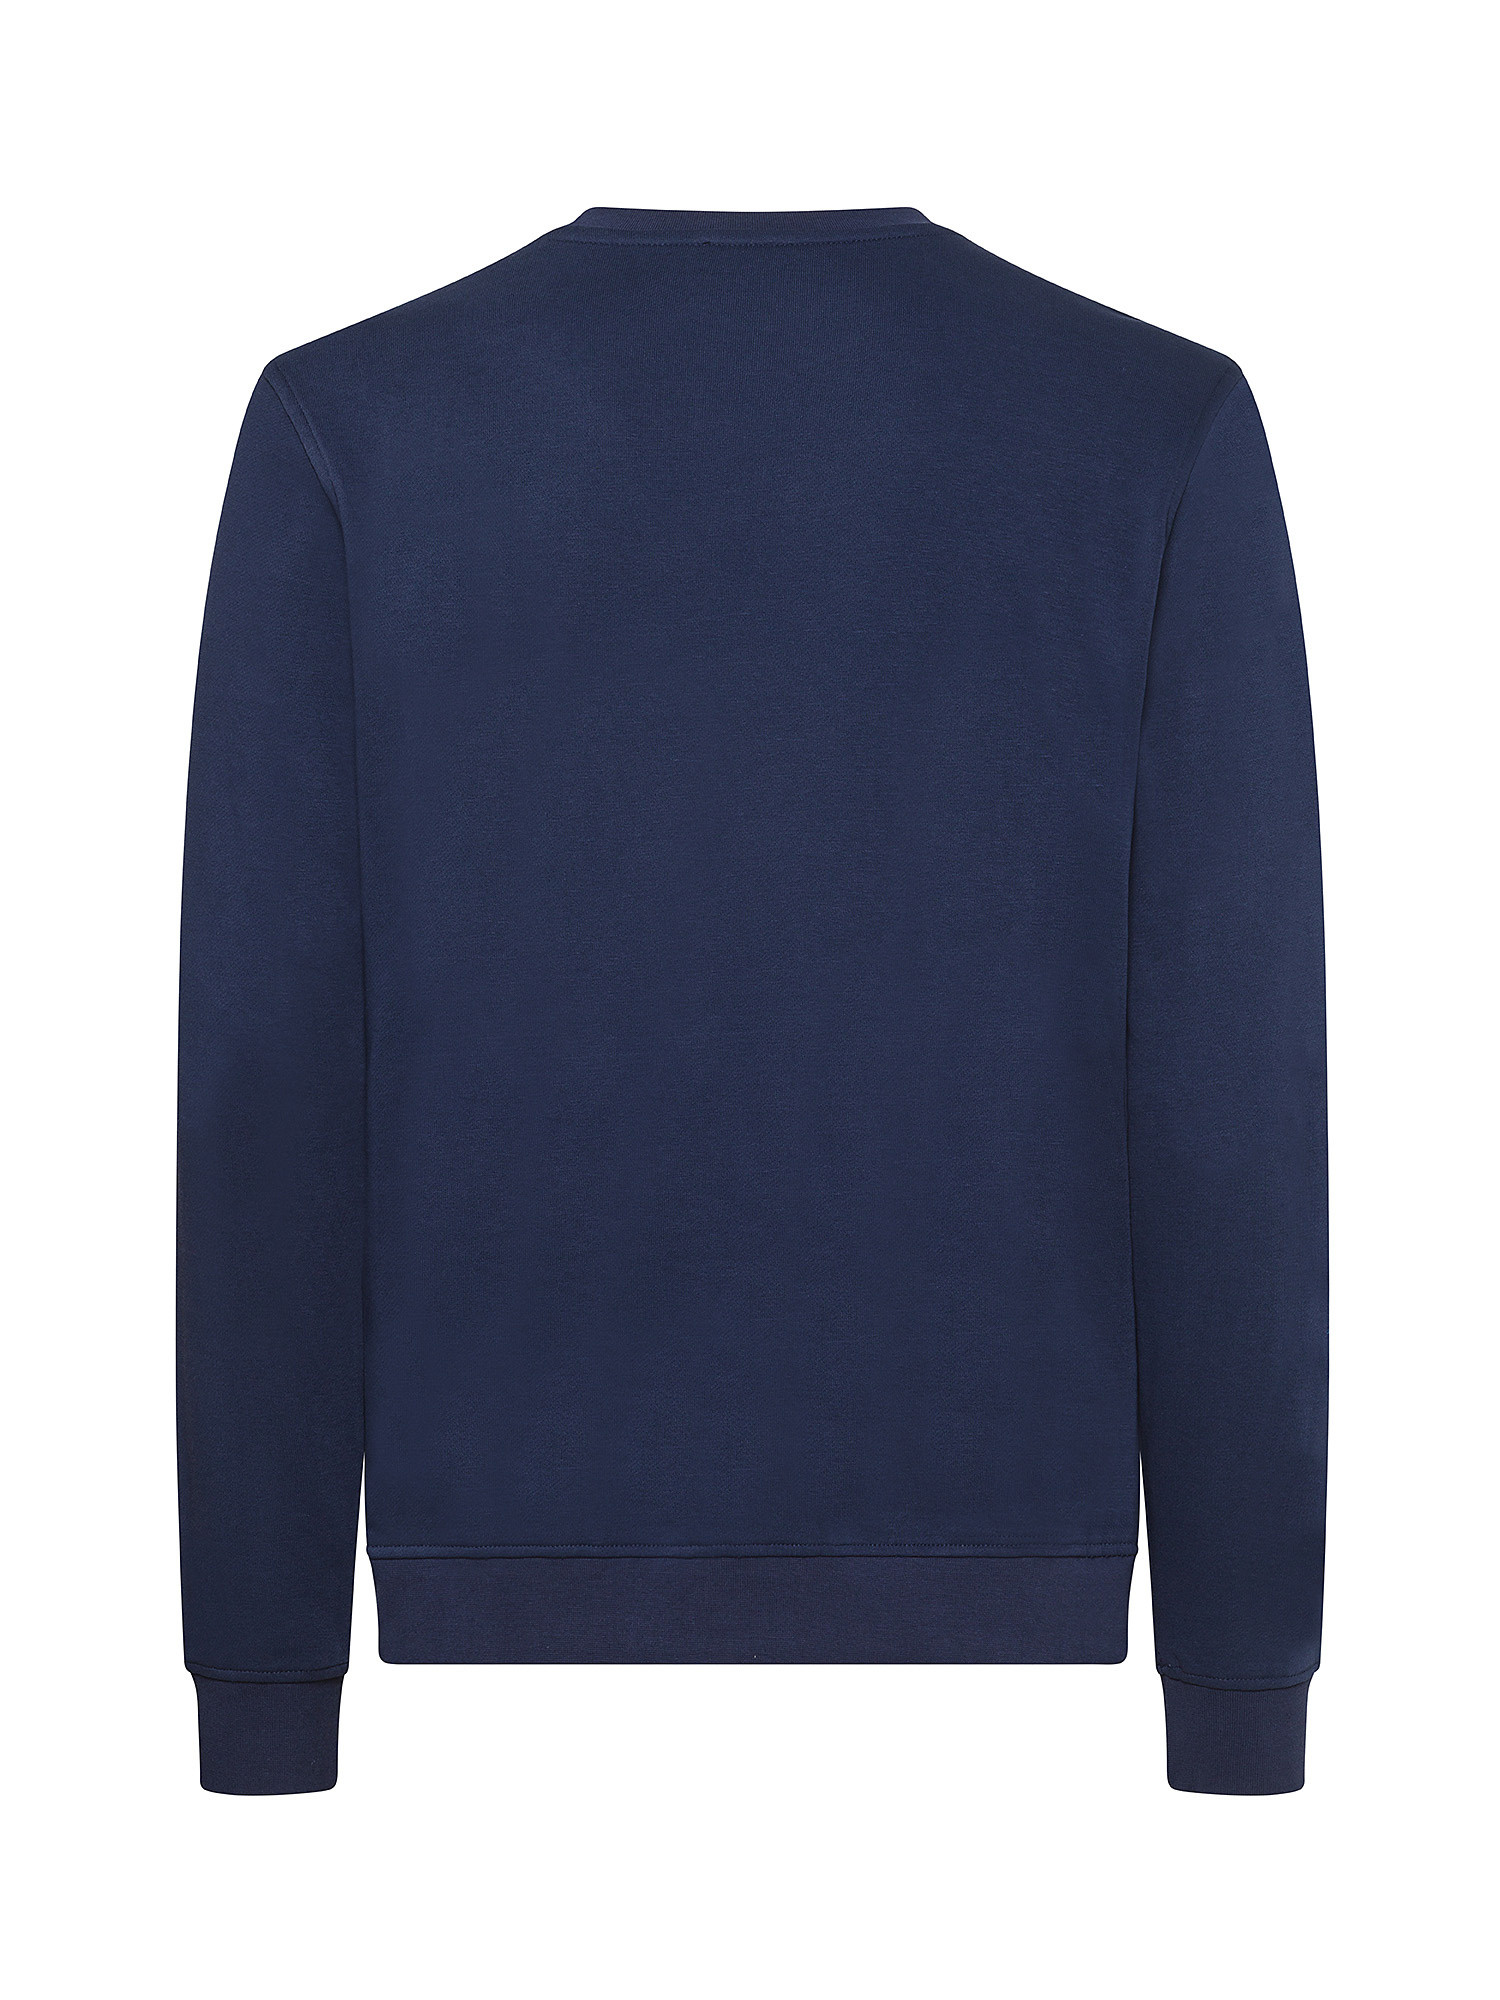 Ciesse Piumini - Flea sweatshirt in cotton blend with logo, Blue, large image number 1